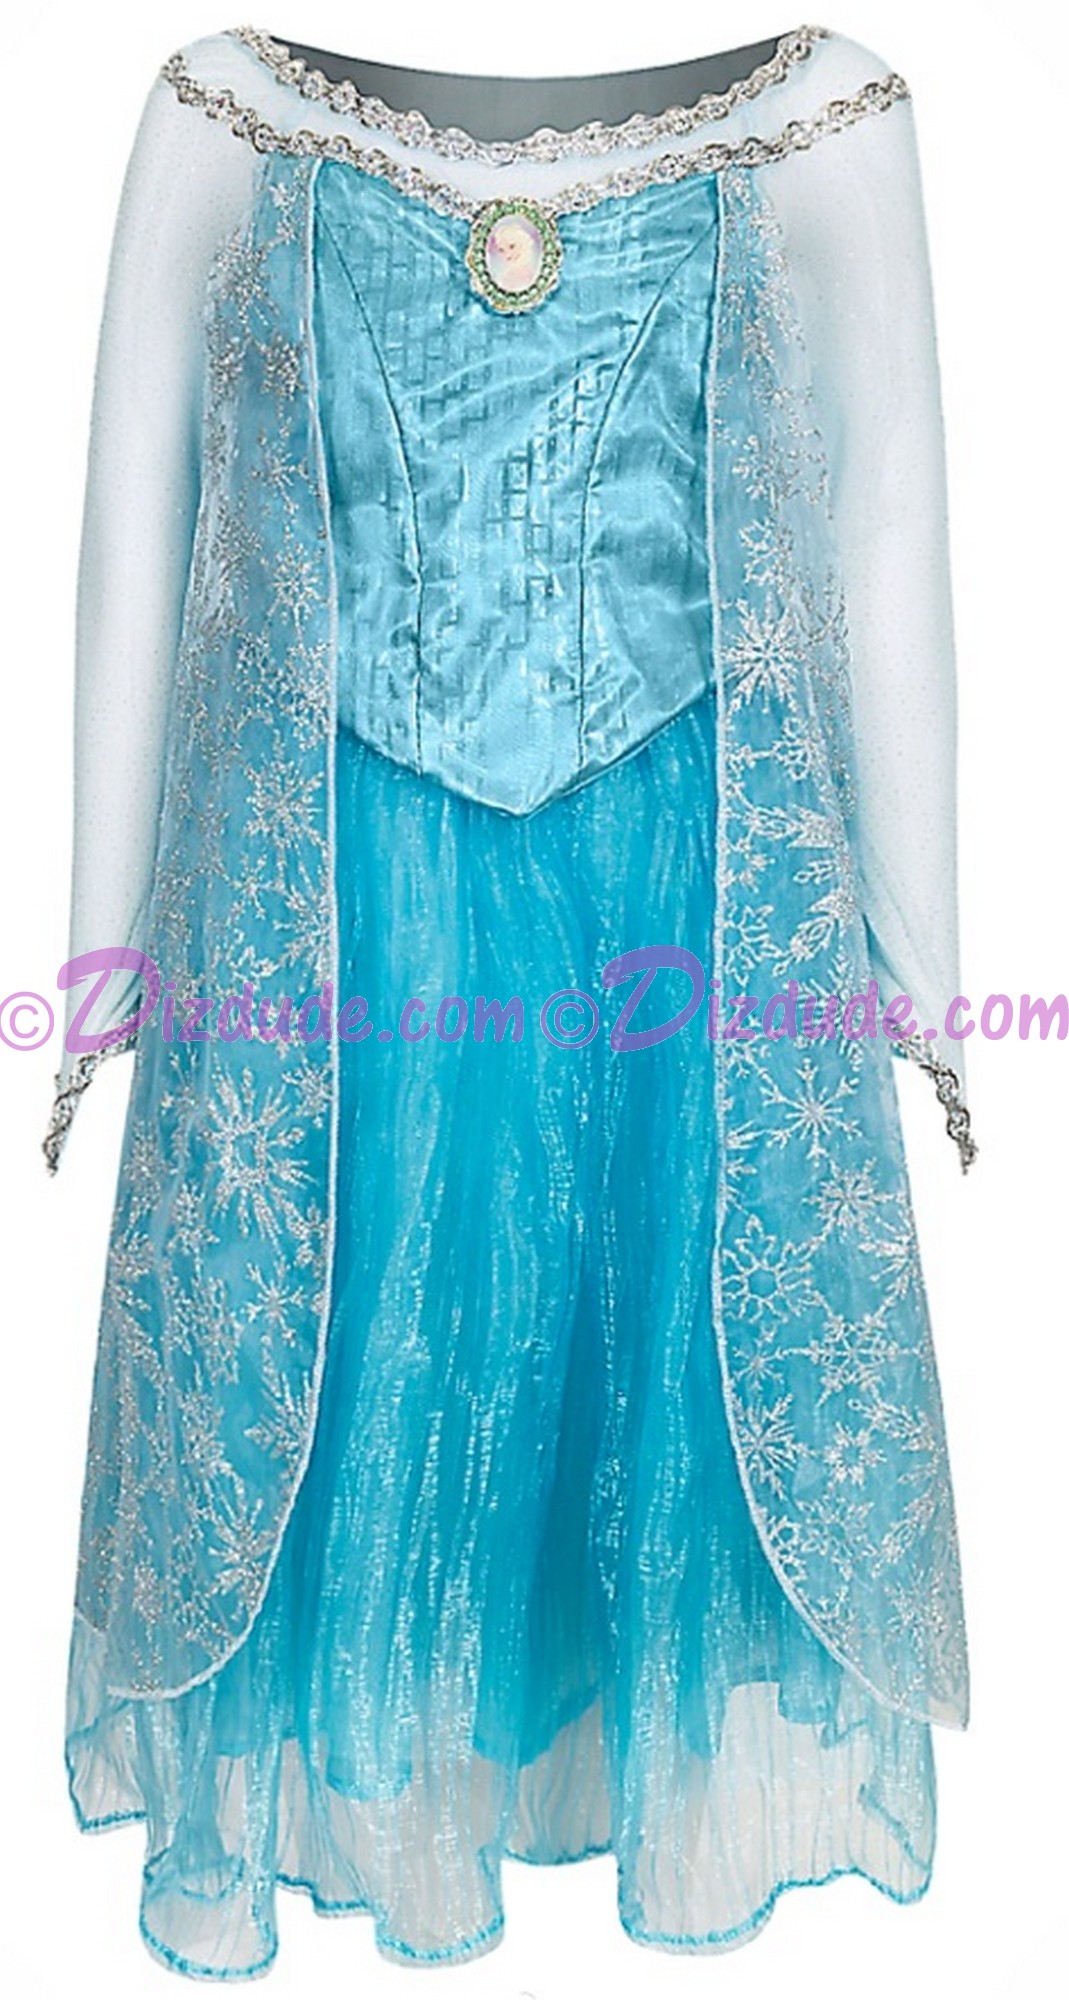 (SOLD OUT) Disney Frozen Elsa Costume Youth Dress - Walt Disney World Exclusive